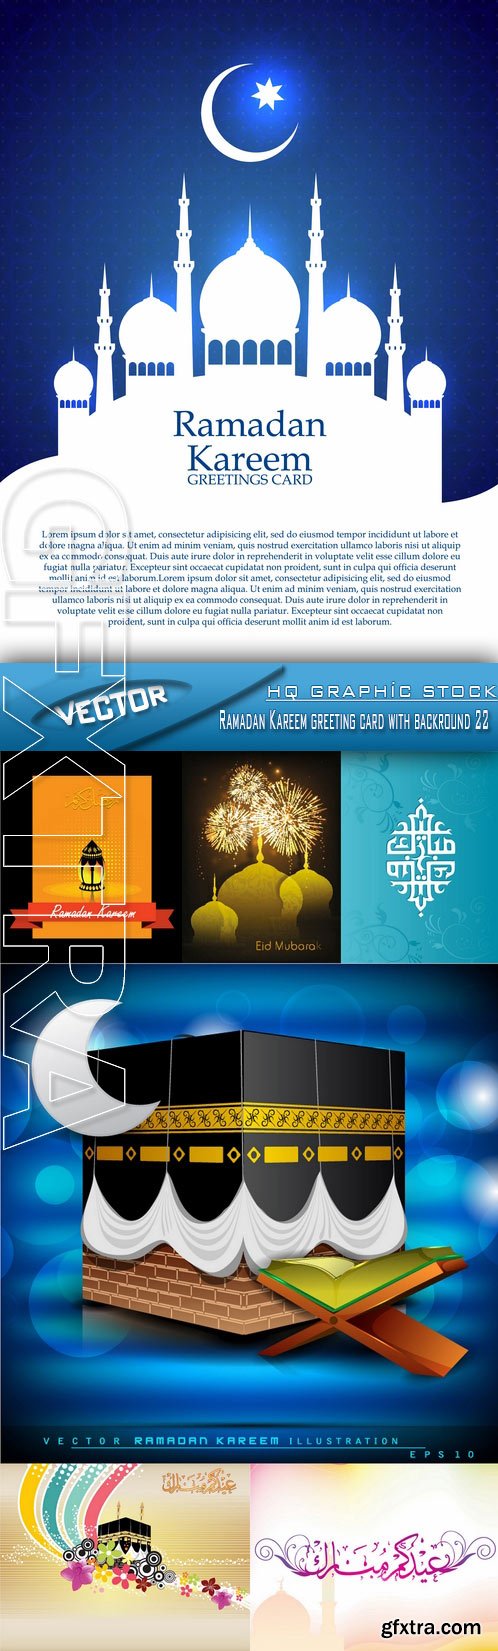 Stock Vector - Ramadan Kareem greeting card with backround 022